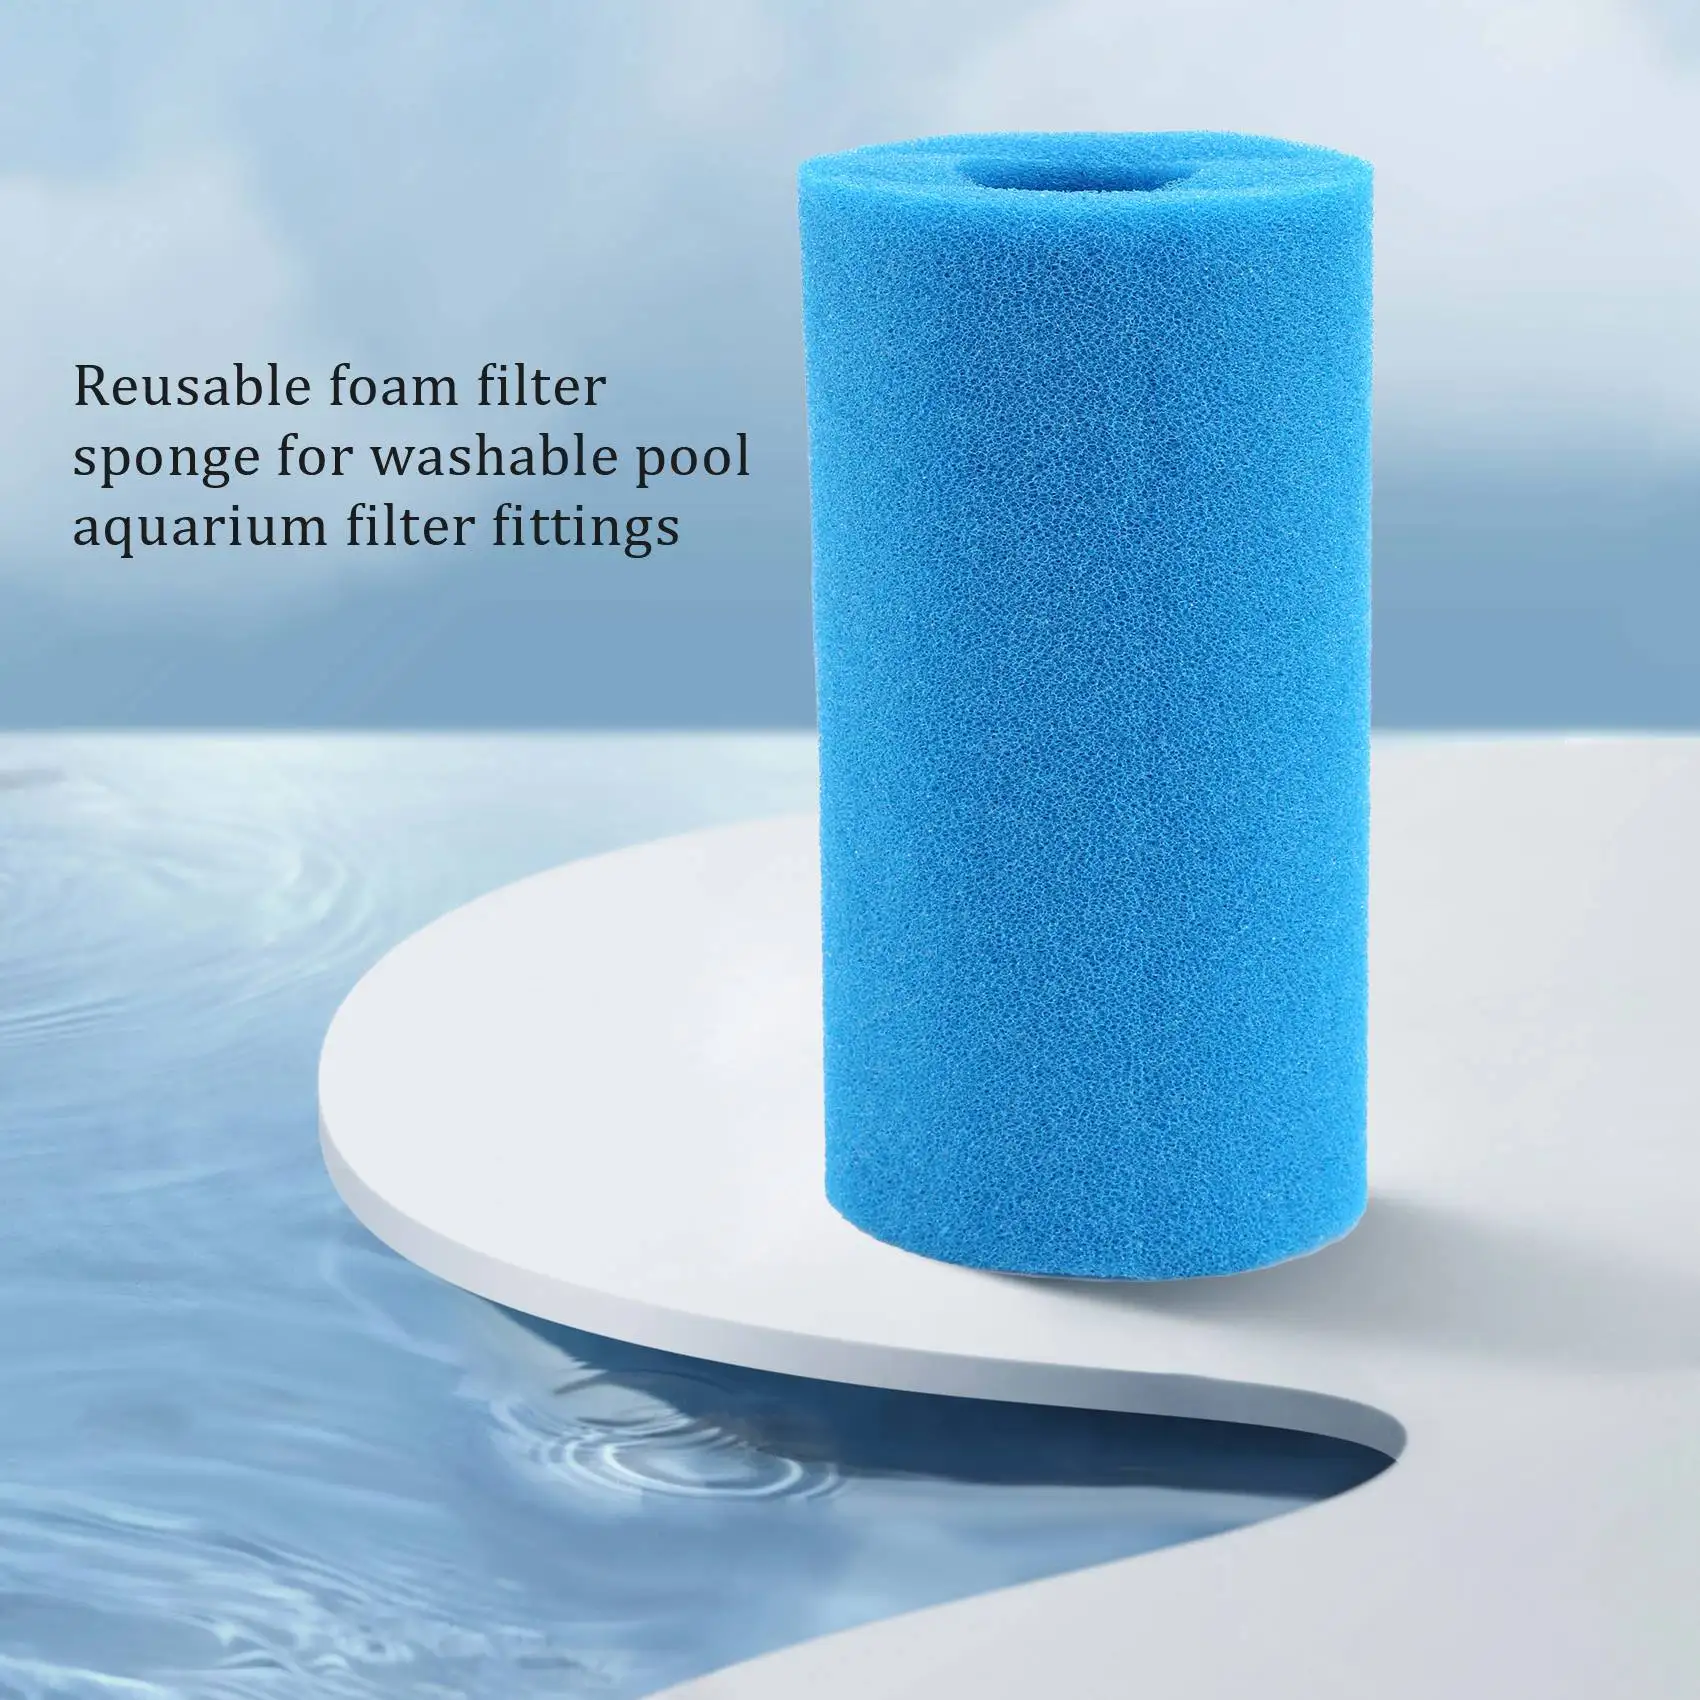 

6 Pcs Foam Filter Sponge for Intex Type A Reusable Washable Swimming Pool Aquarium Filter Accessories